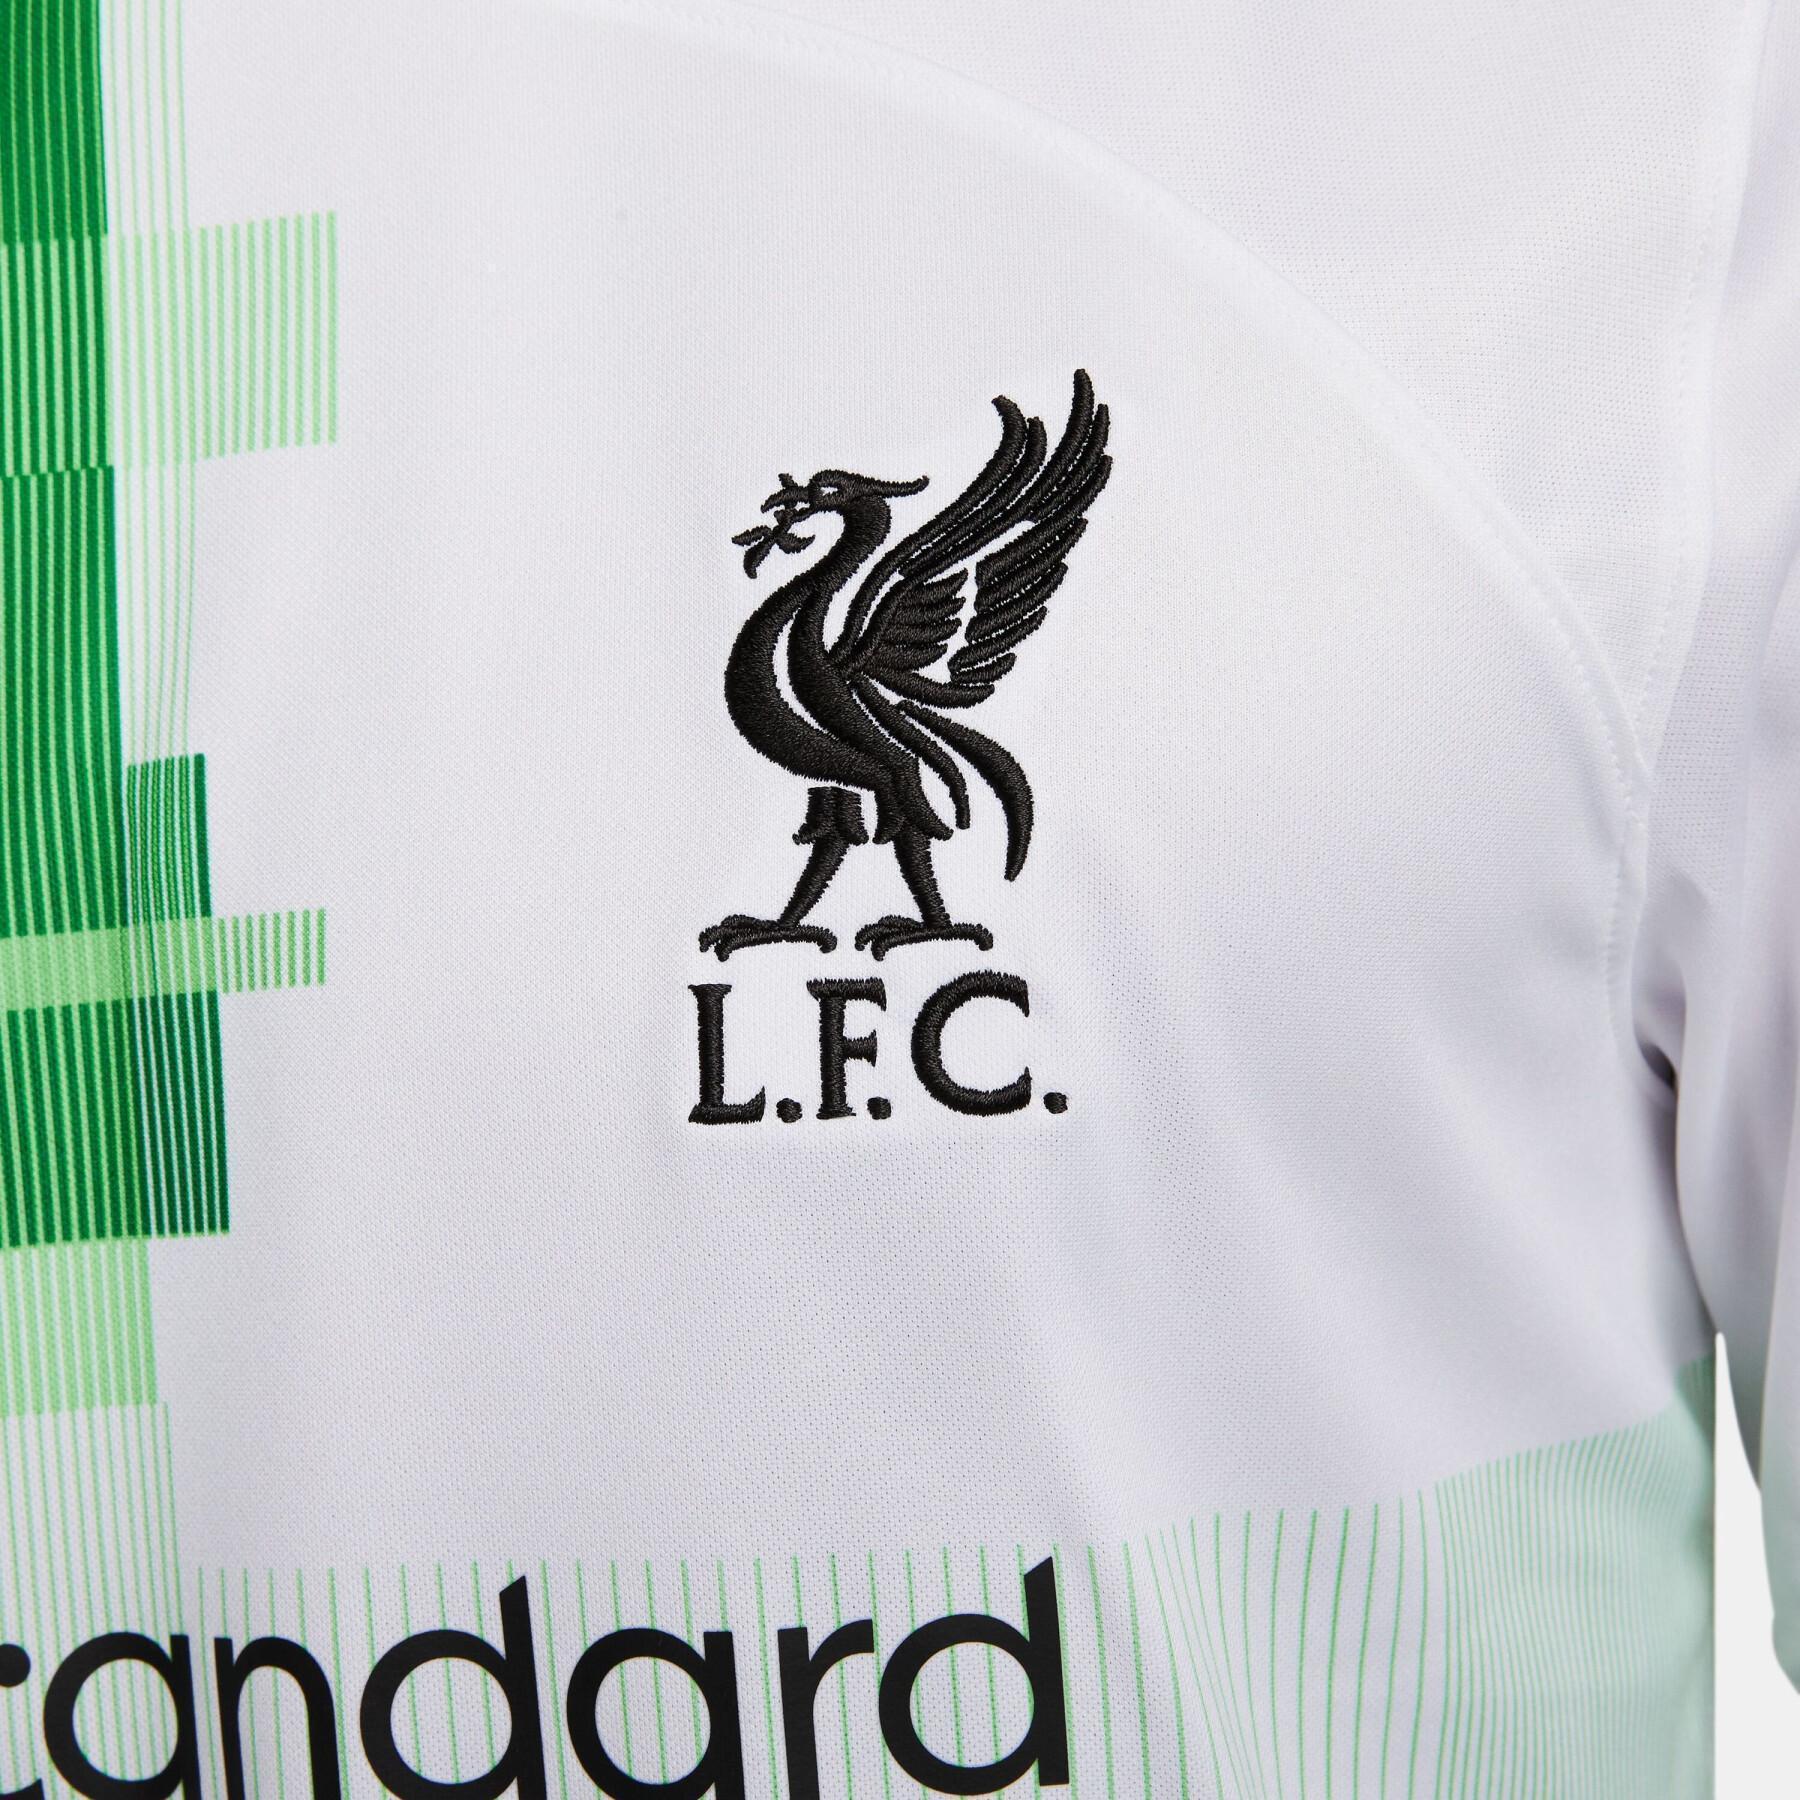 Away jersey Liverpool FC 2023/24